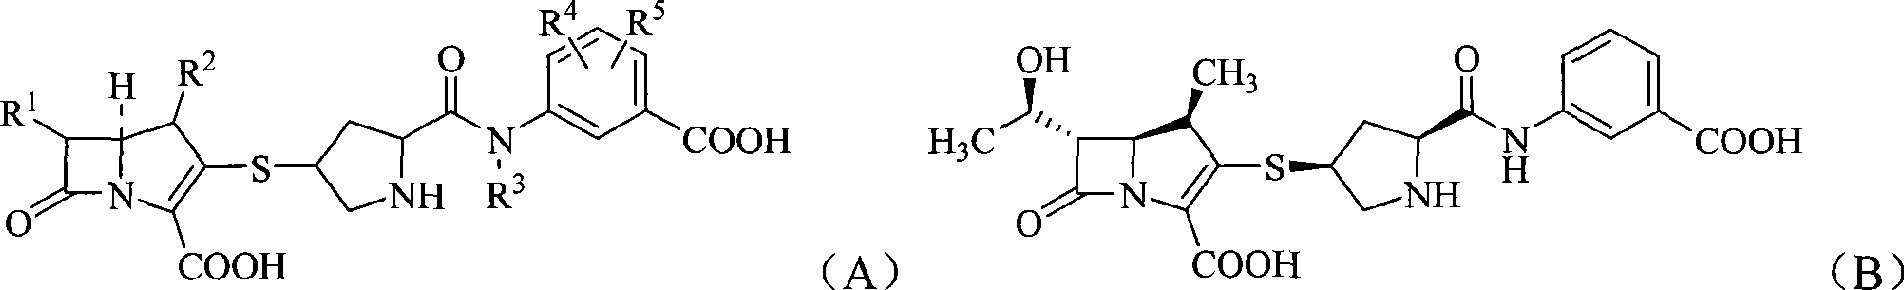 1beta-methyl carbapenem compound